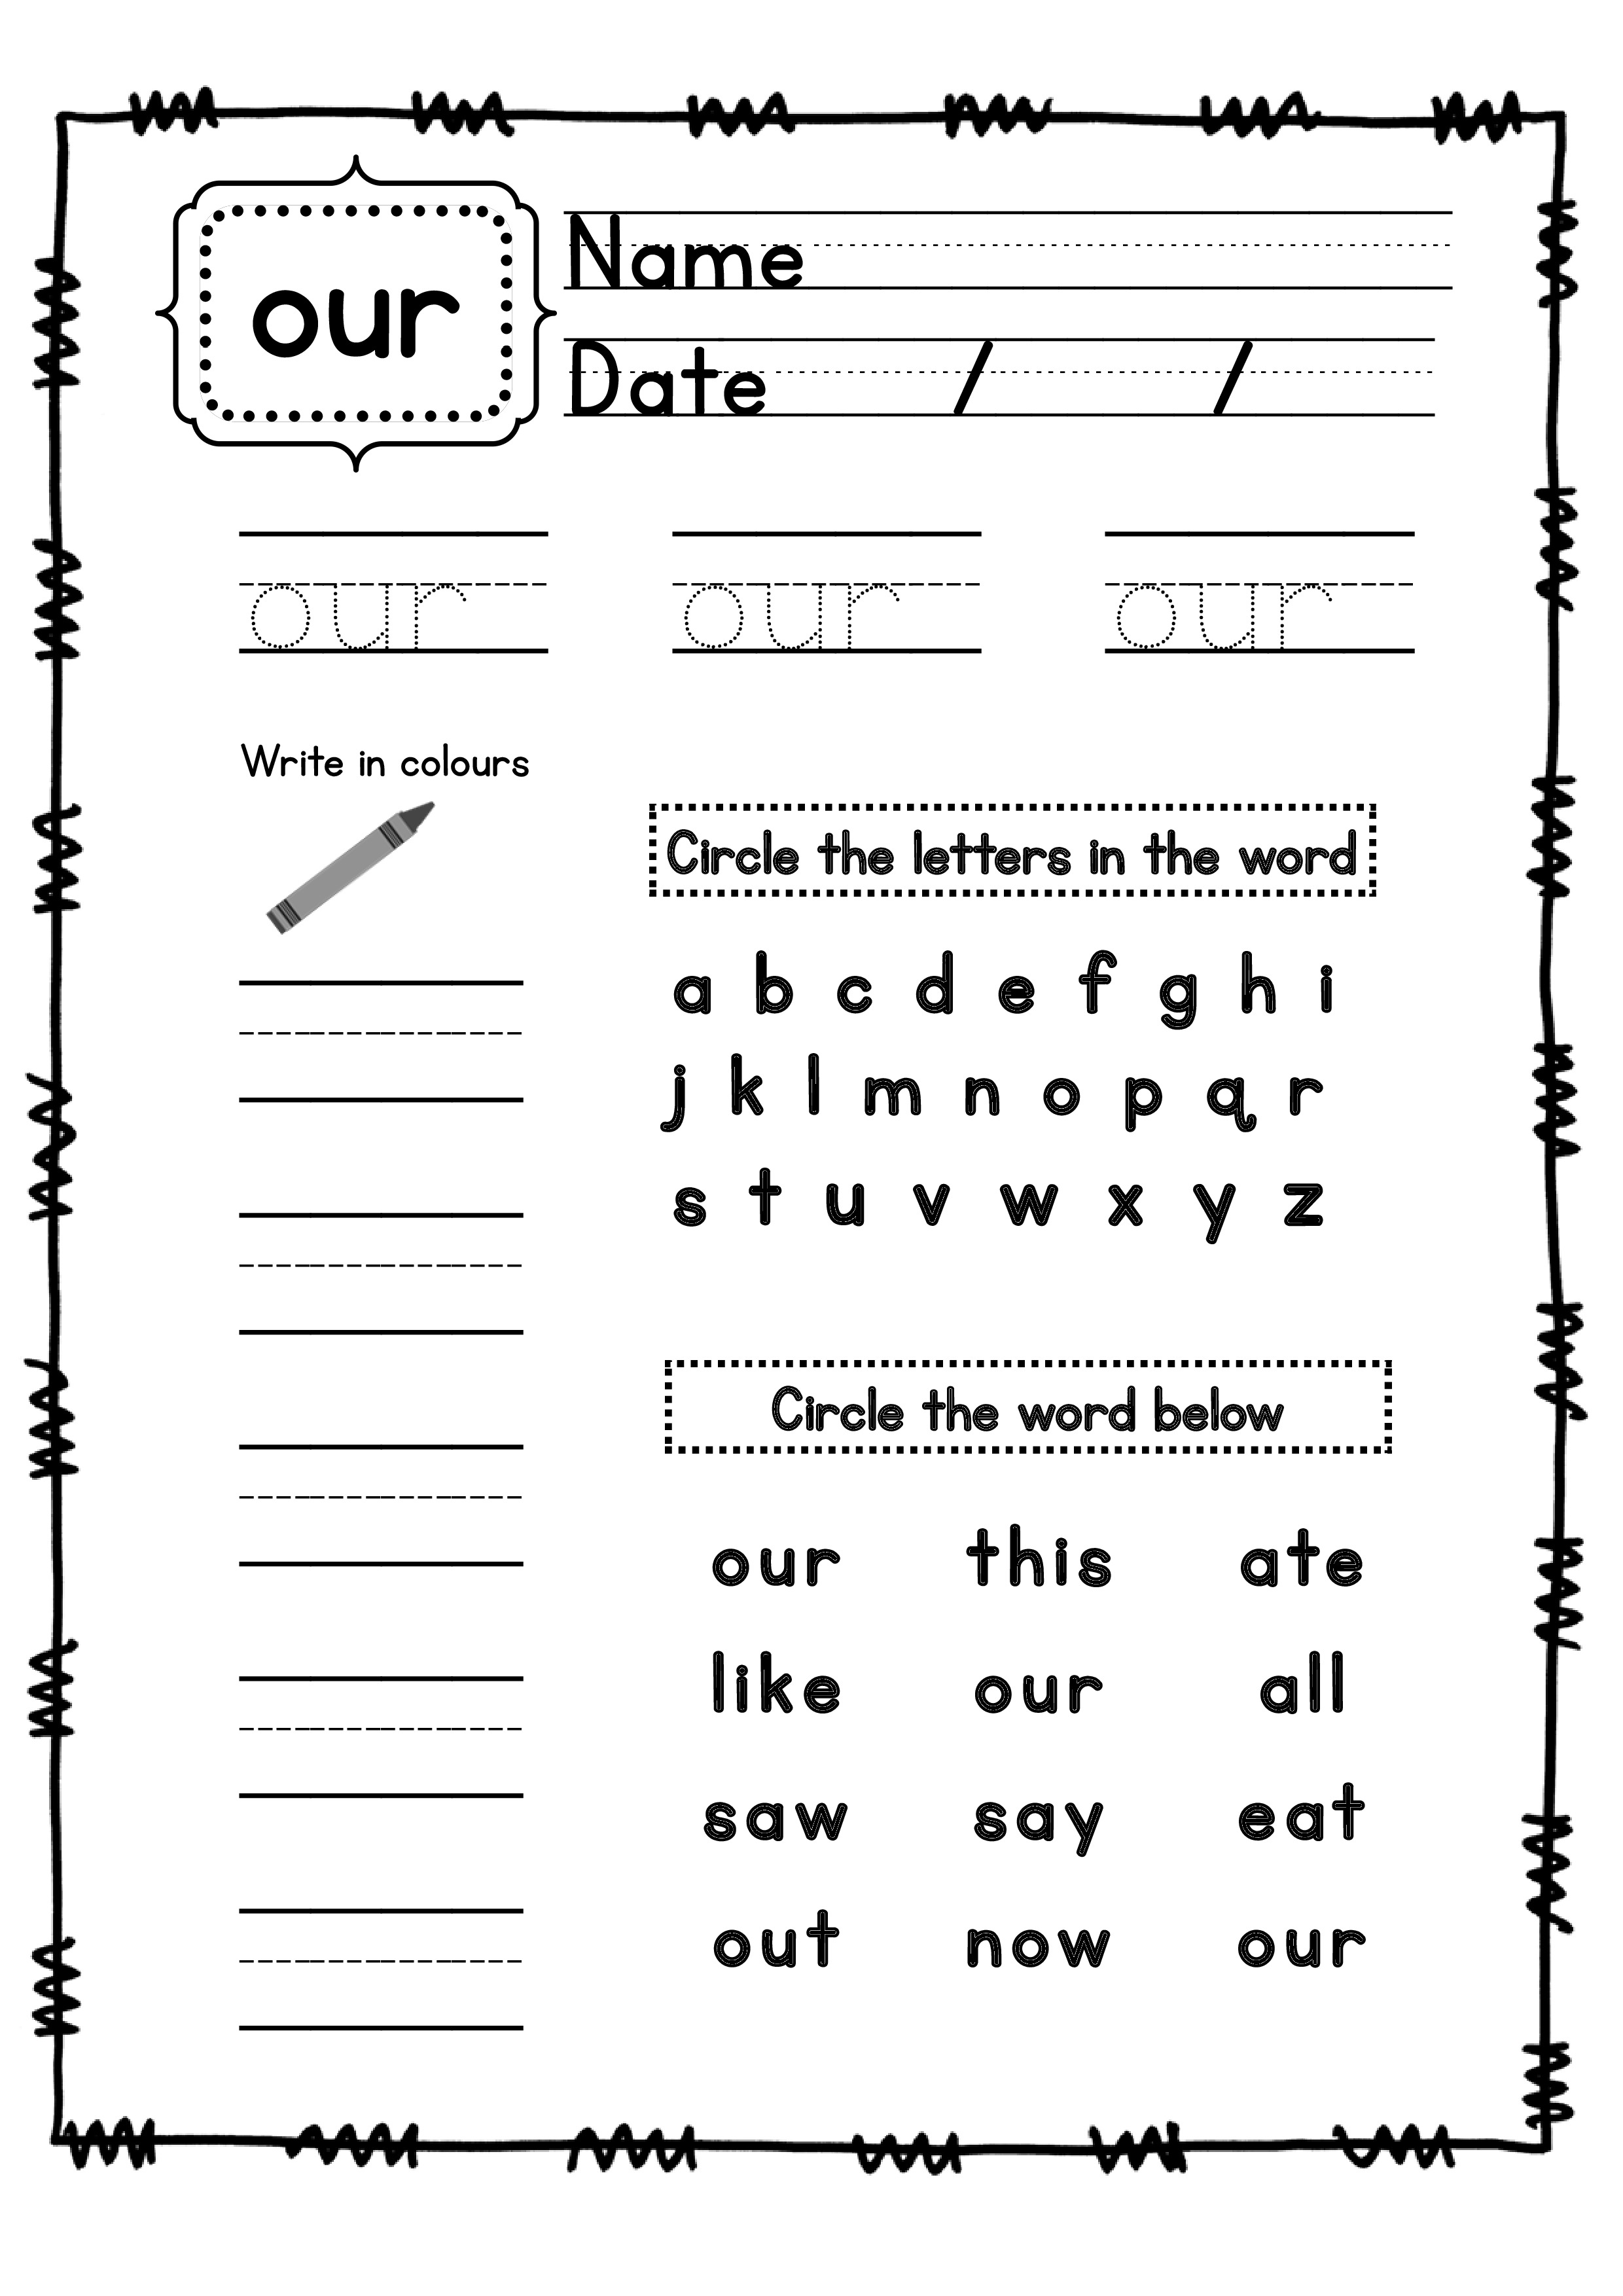 Collection Of Sight Words Worksheets For Kindergarten Pdf